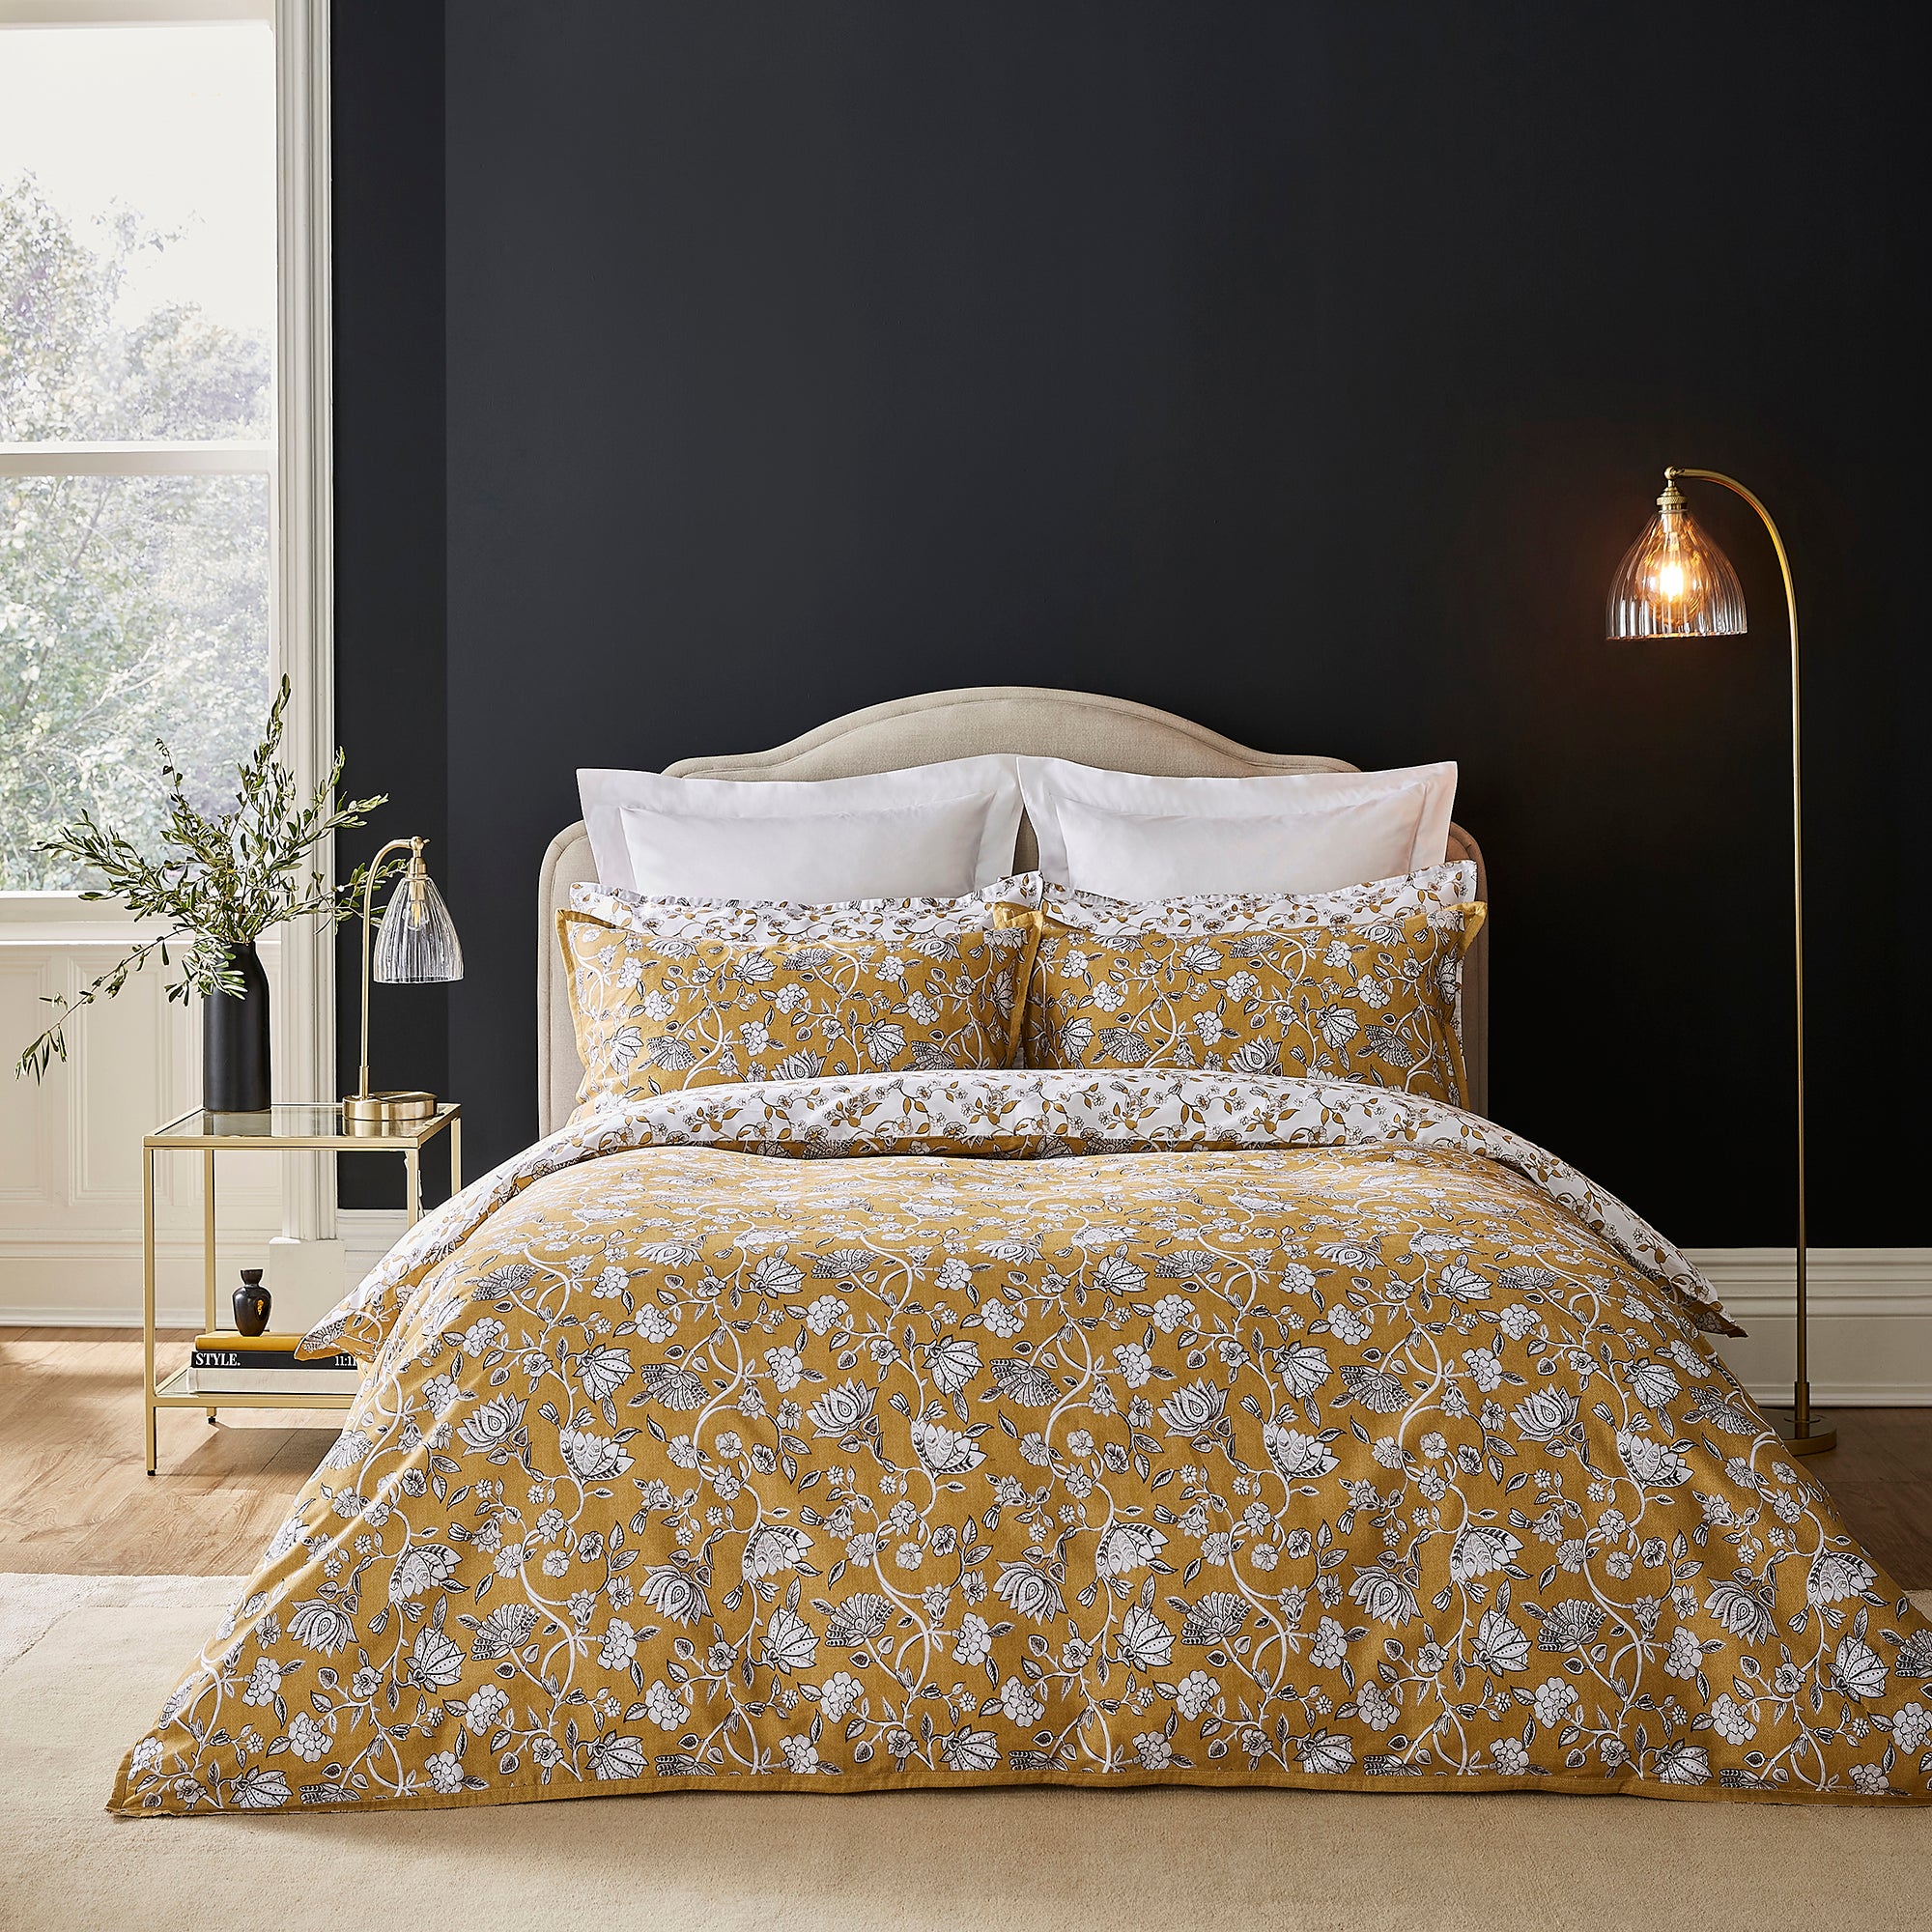 Dorma Evander Ochre Cotton Duvet Cover And Pillowcase Set Yellowwhite